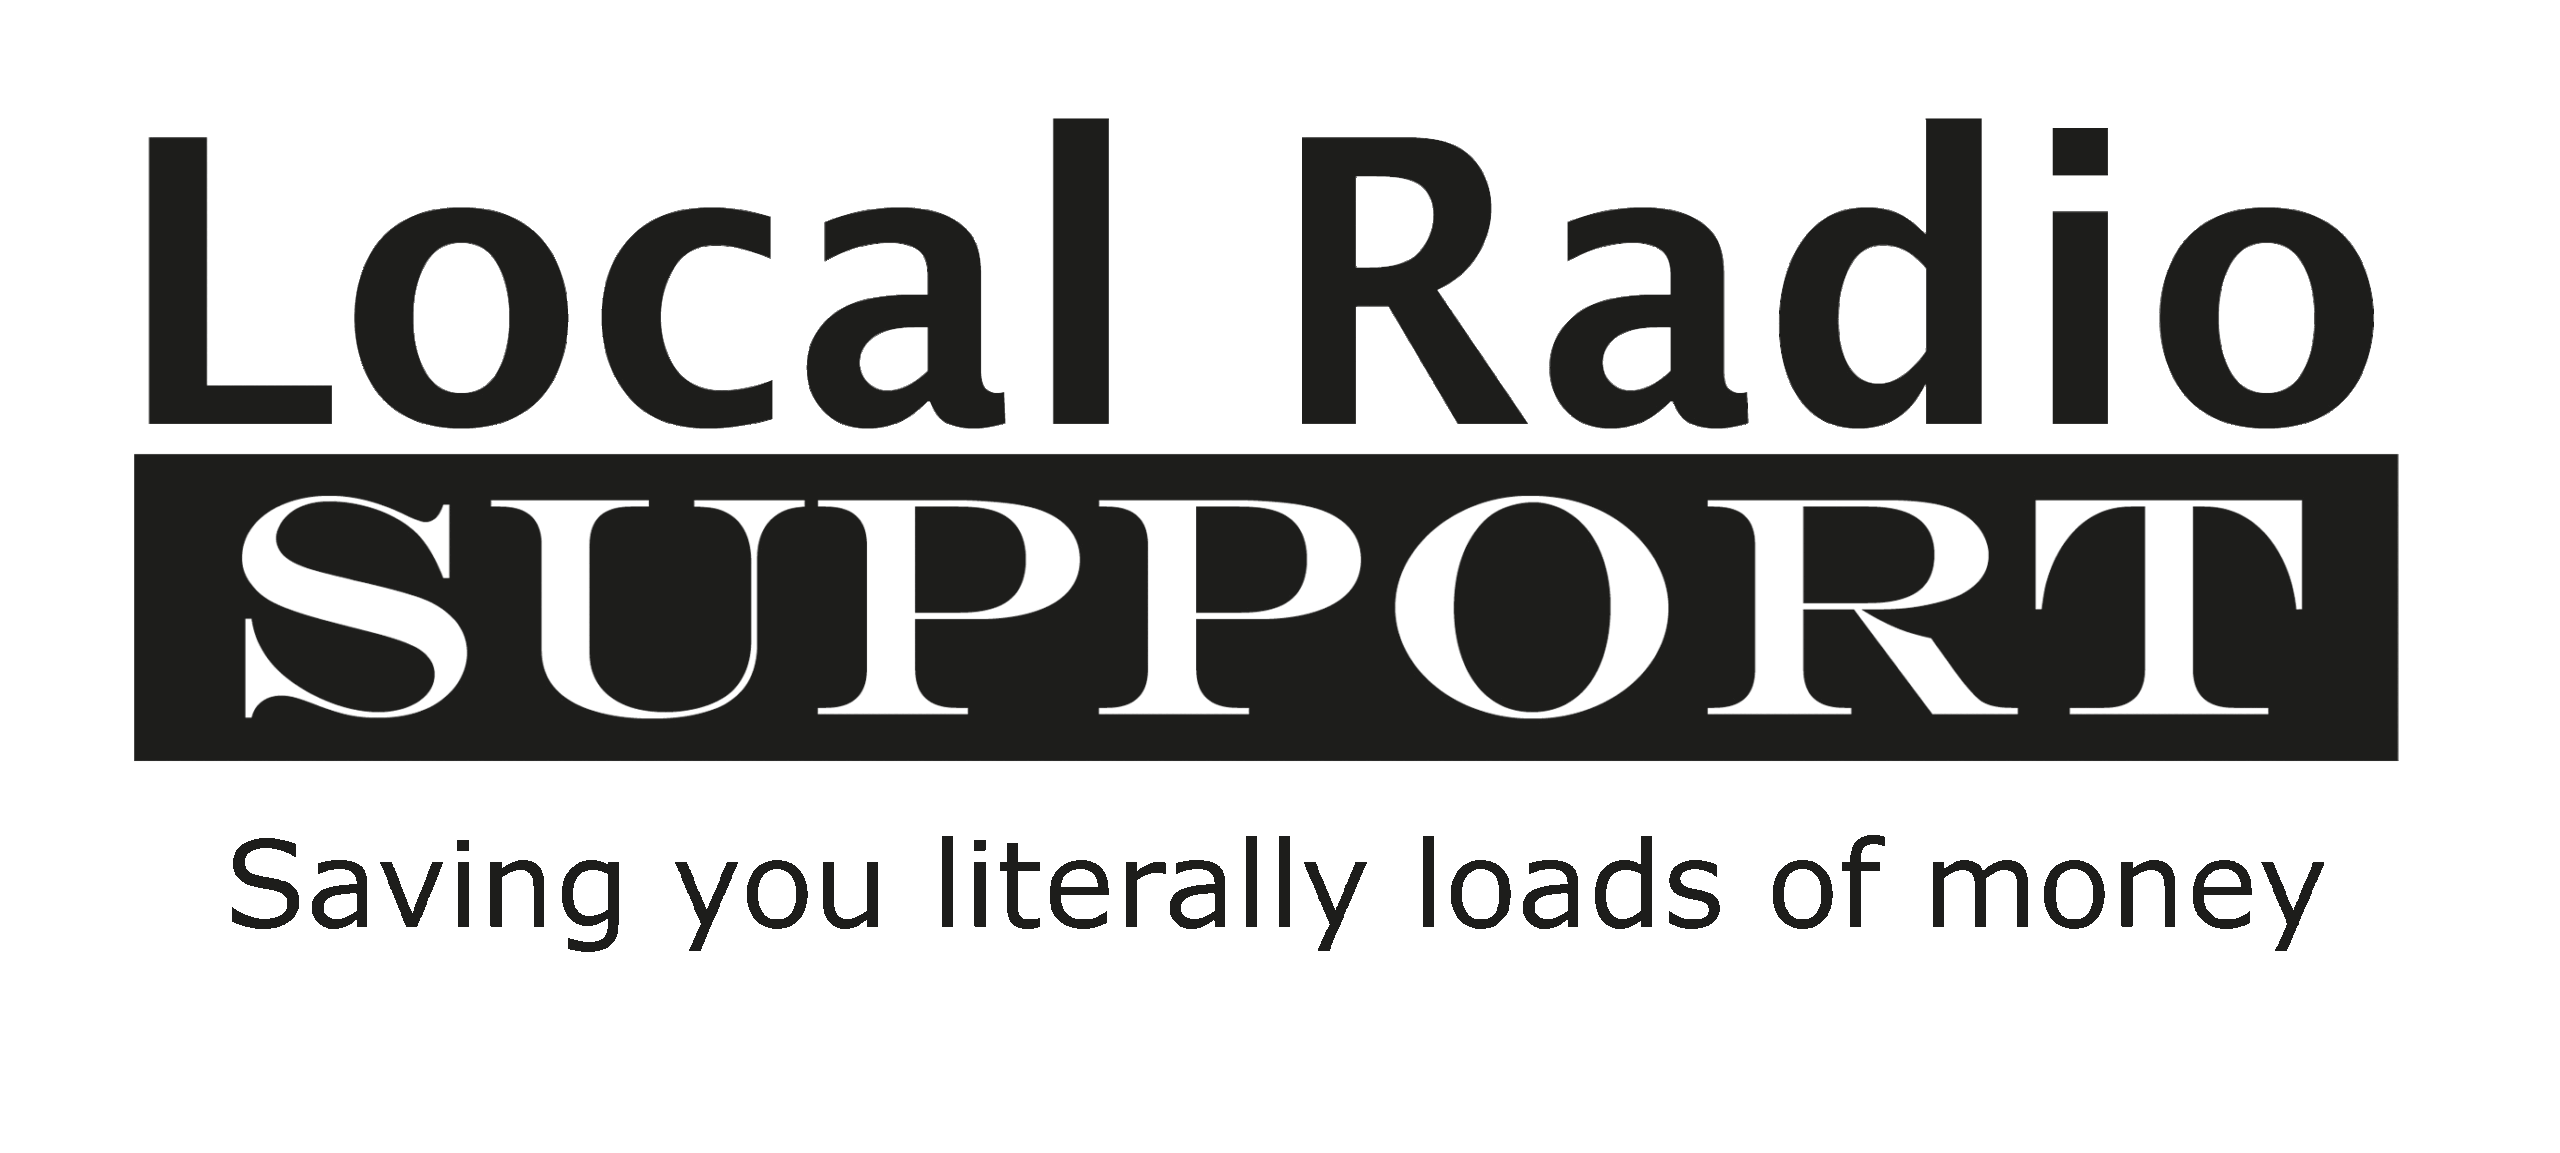 Local Radio Support Ltd